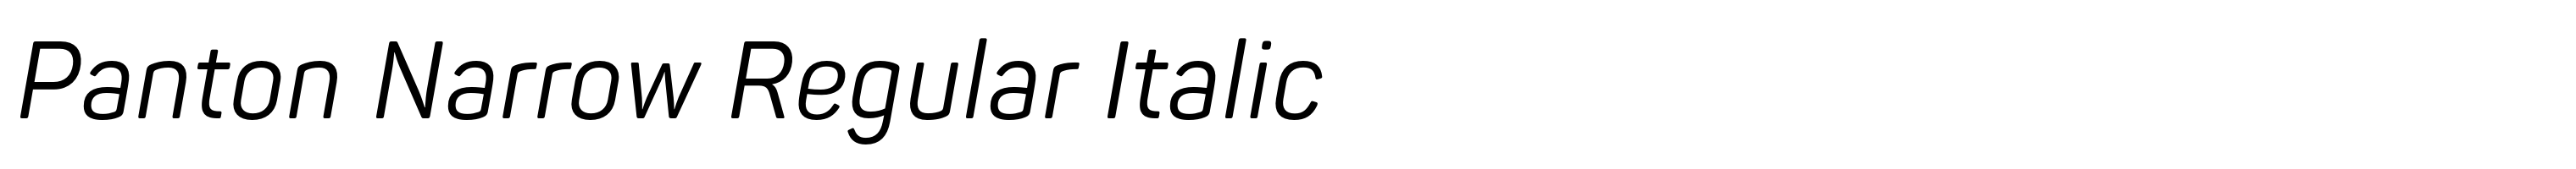 Panton Narrow Regular Italic